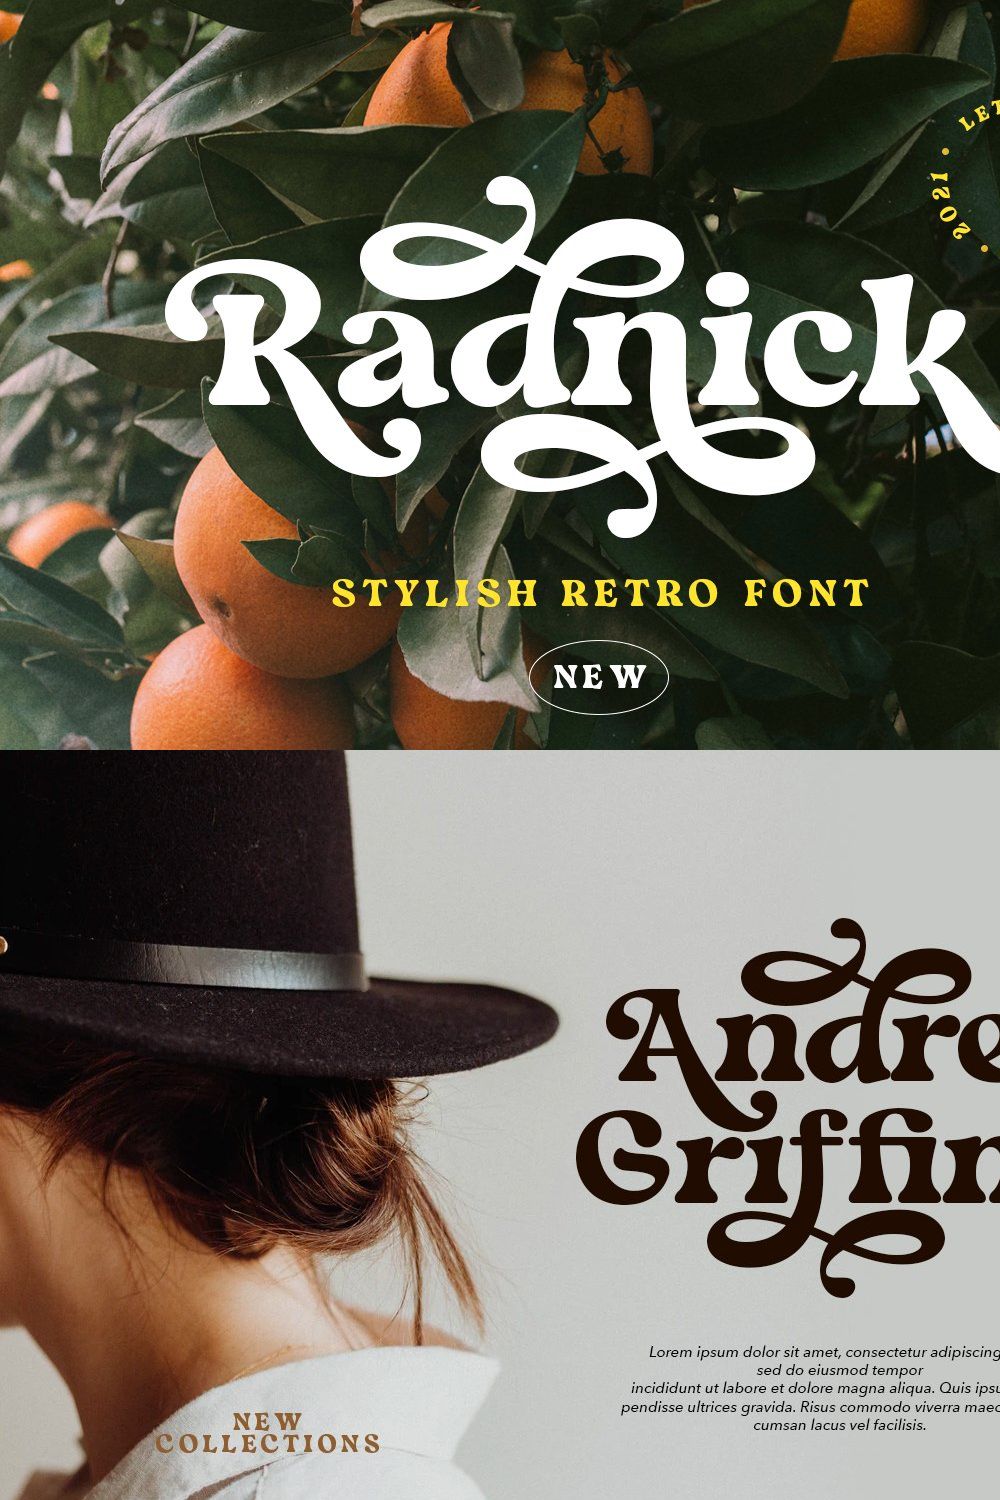 Radnick - Stylish Retro Font pinterest preview image.